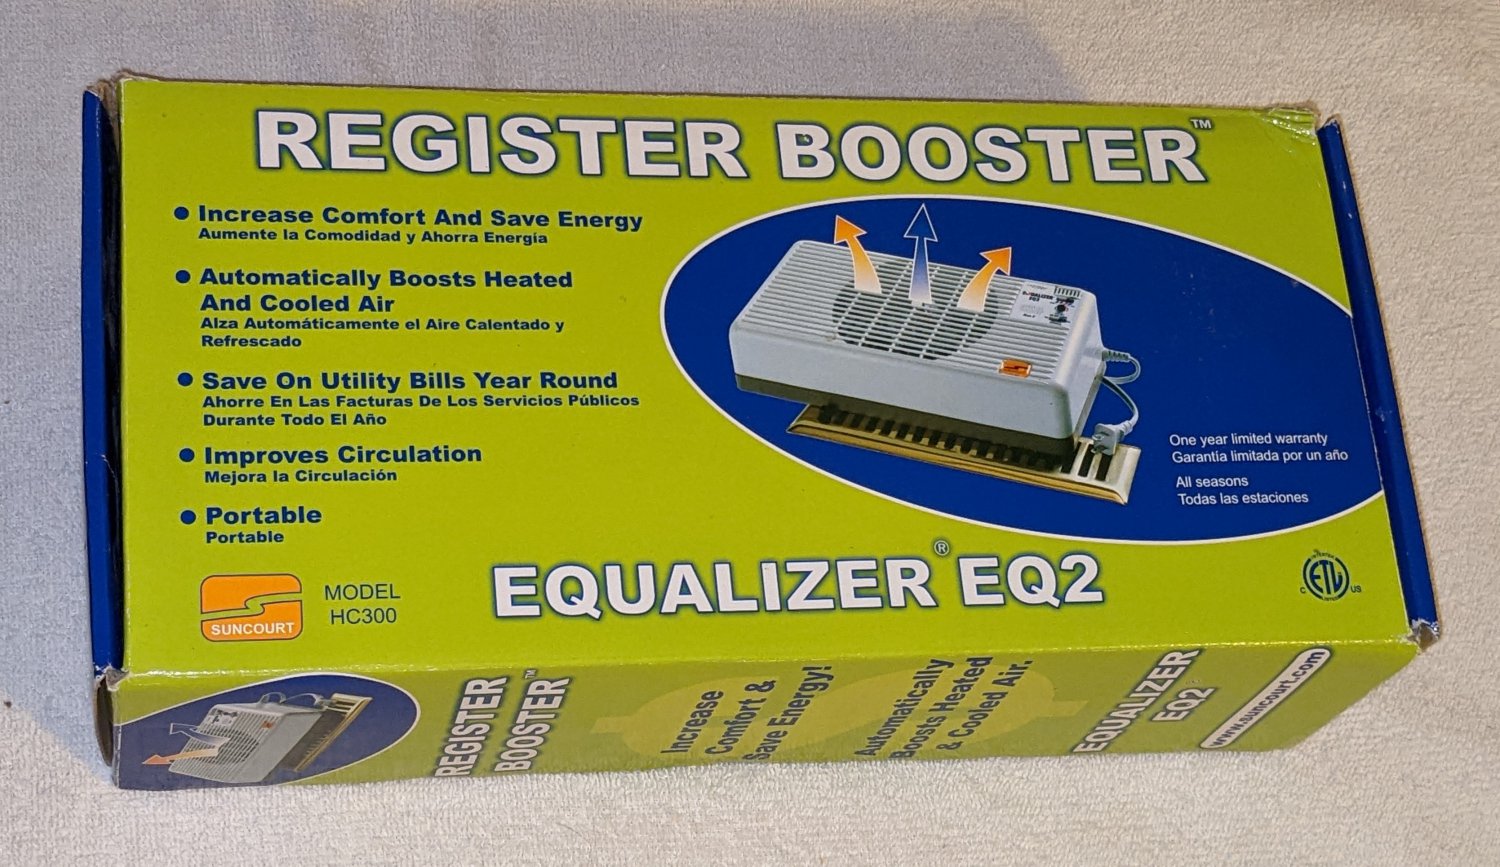 Suncourt Register Booster Equalizer EQ2 Model HC300